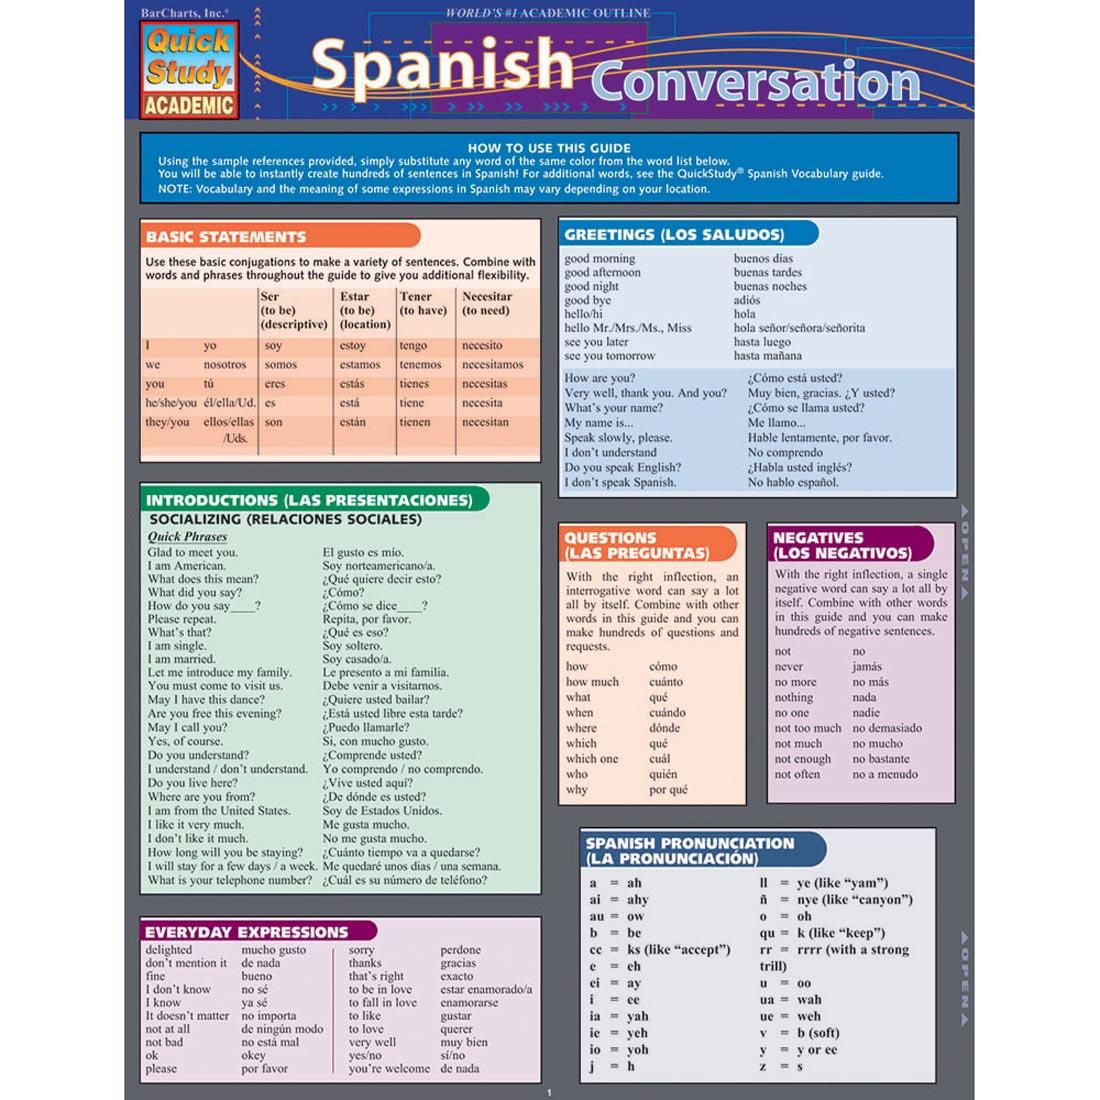 Spanish Conversation Study Guide